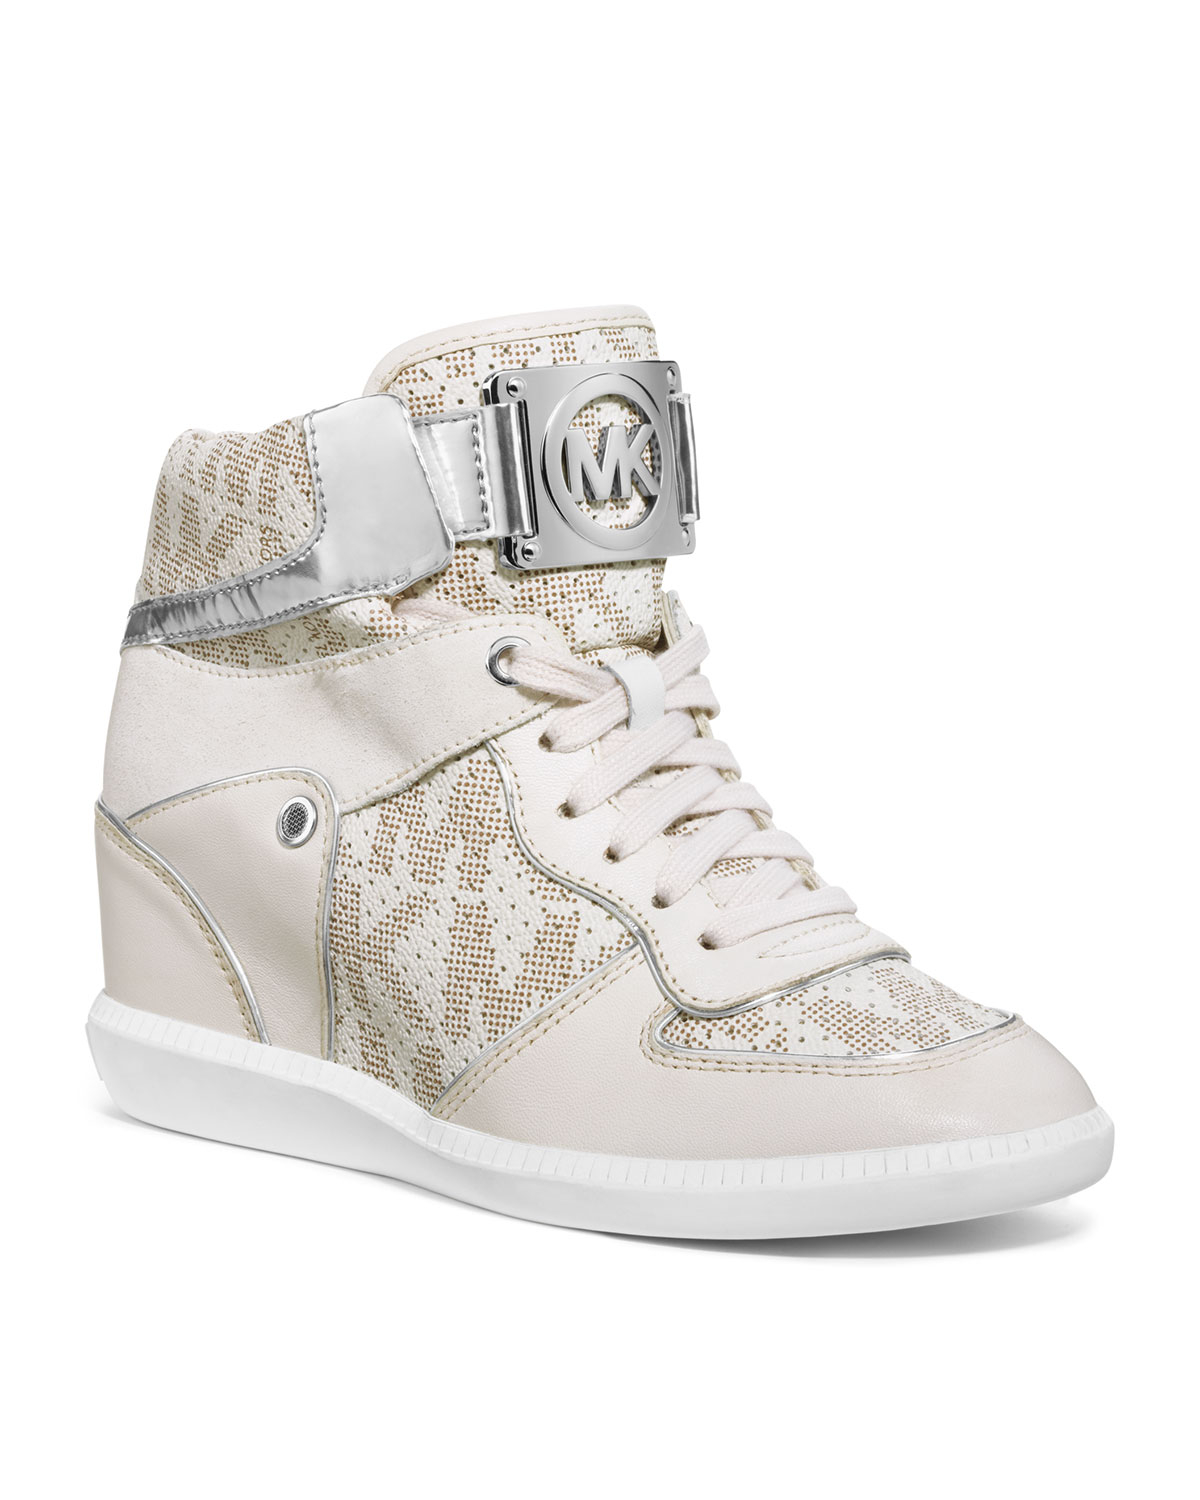 Lyst - Michael Kors Nikko High Top Sneaker in White